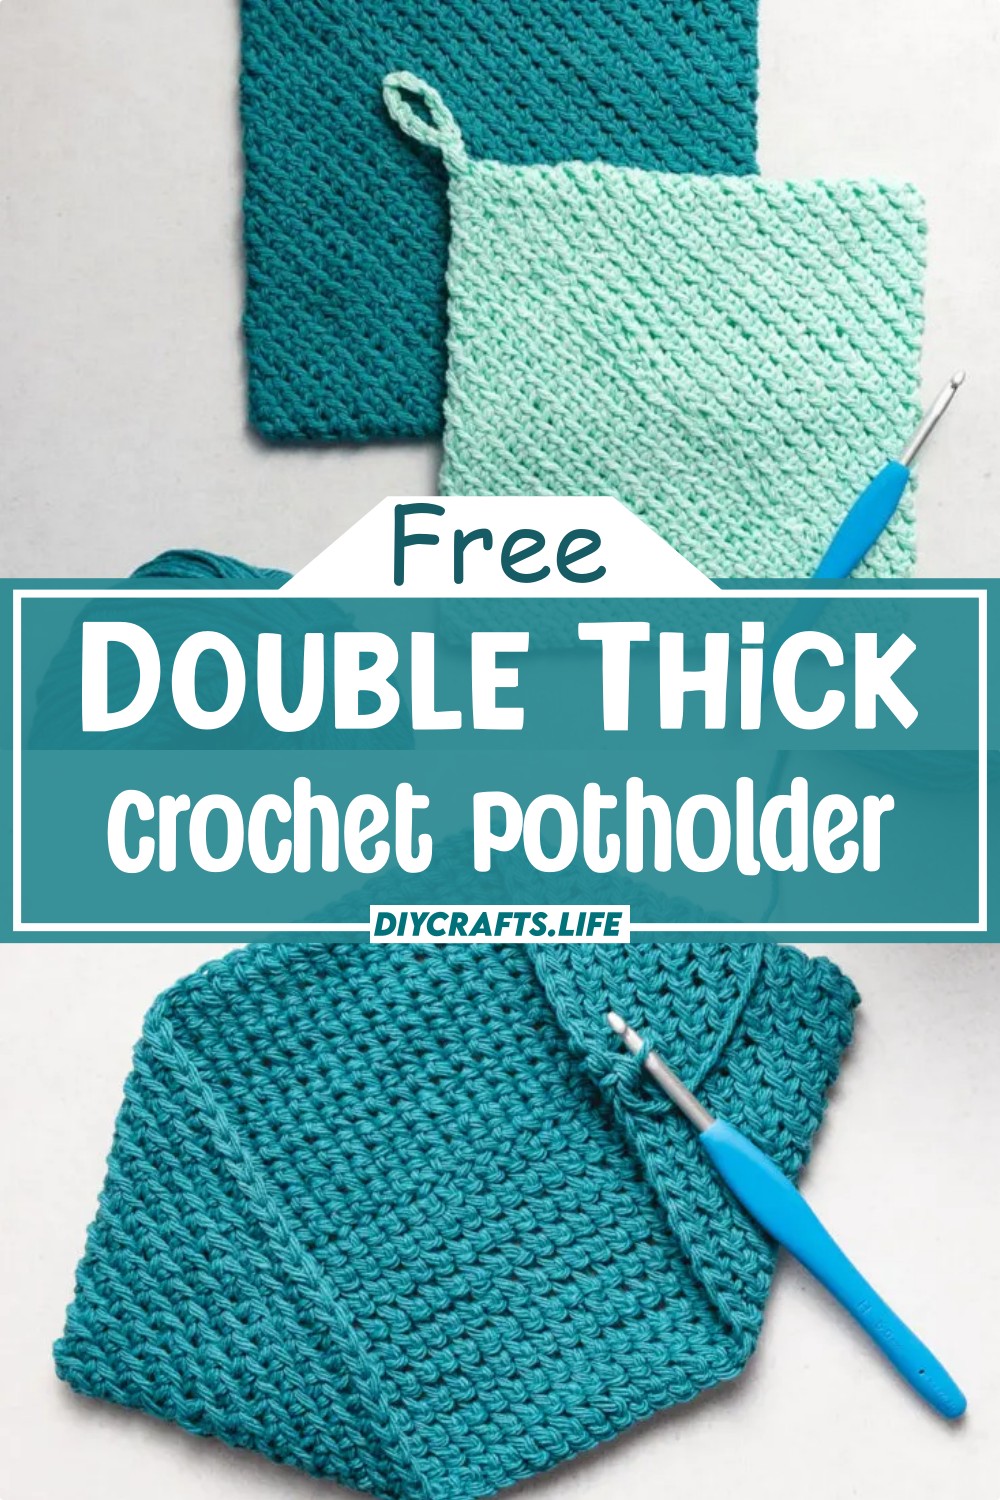  Double Thick Crochet Potholder